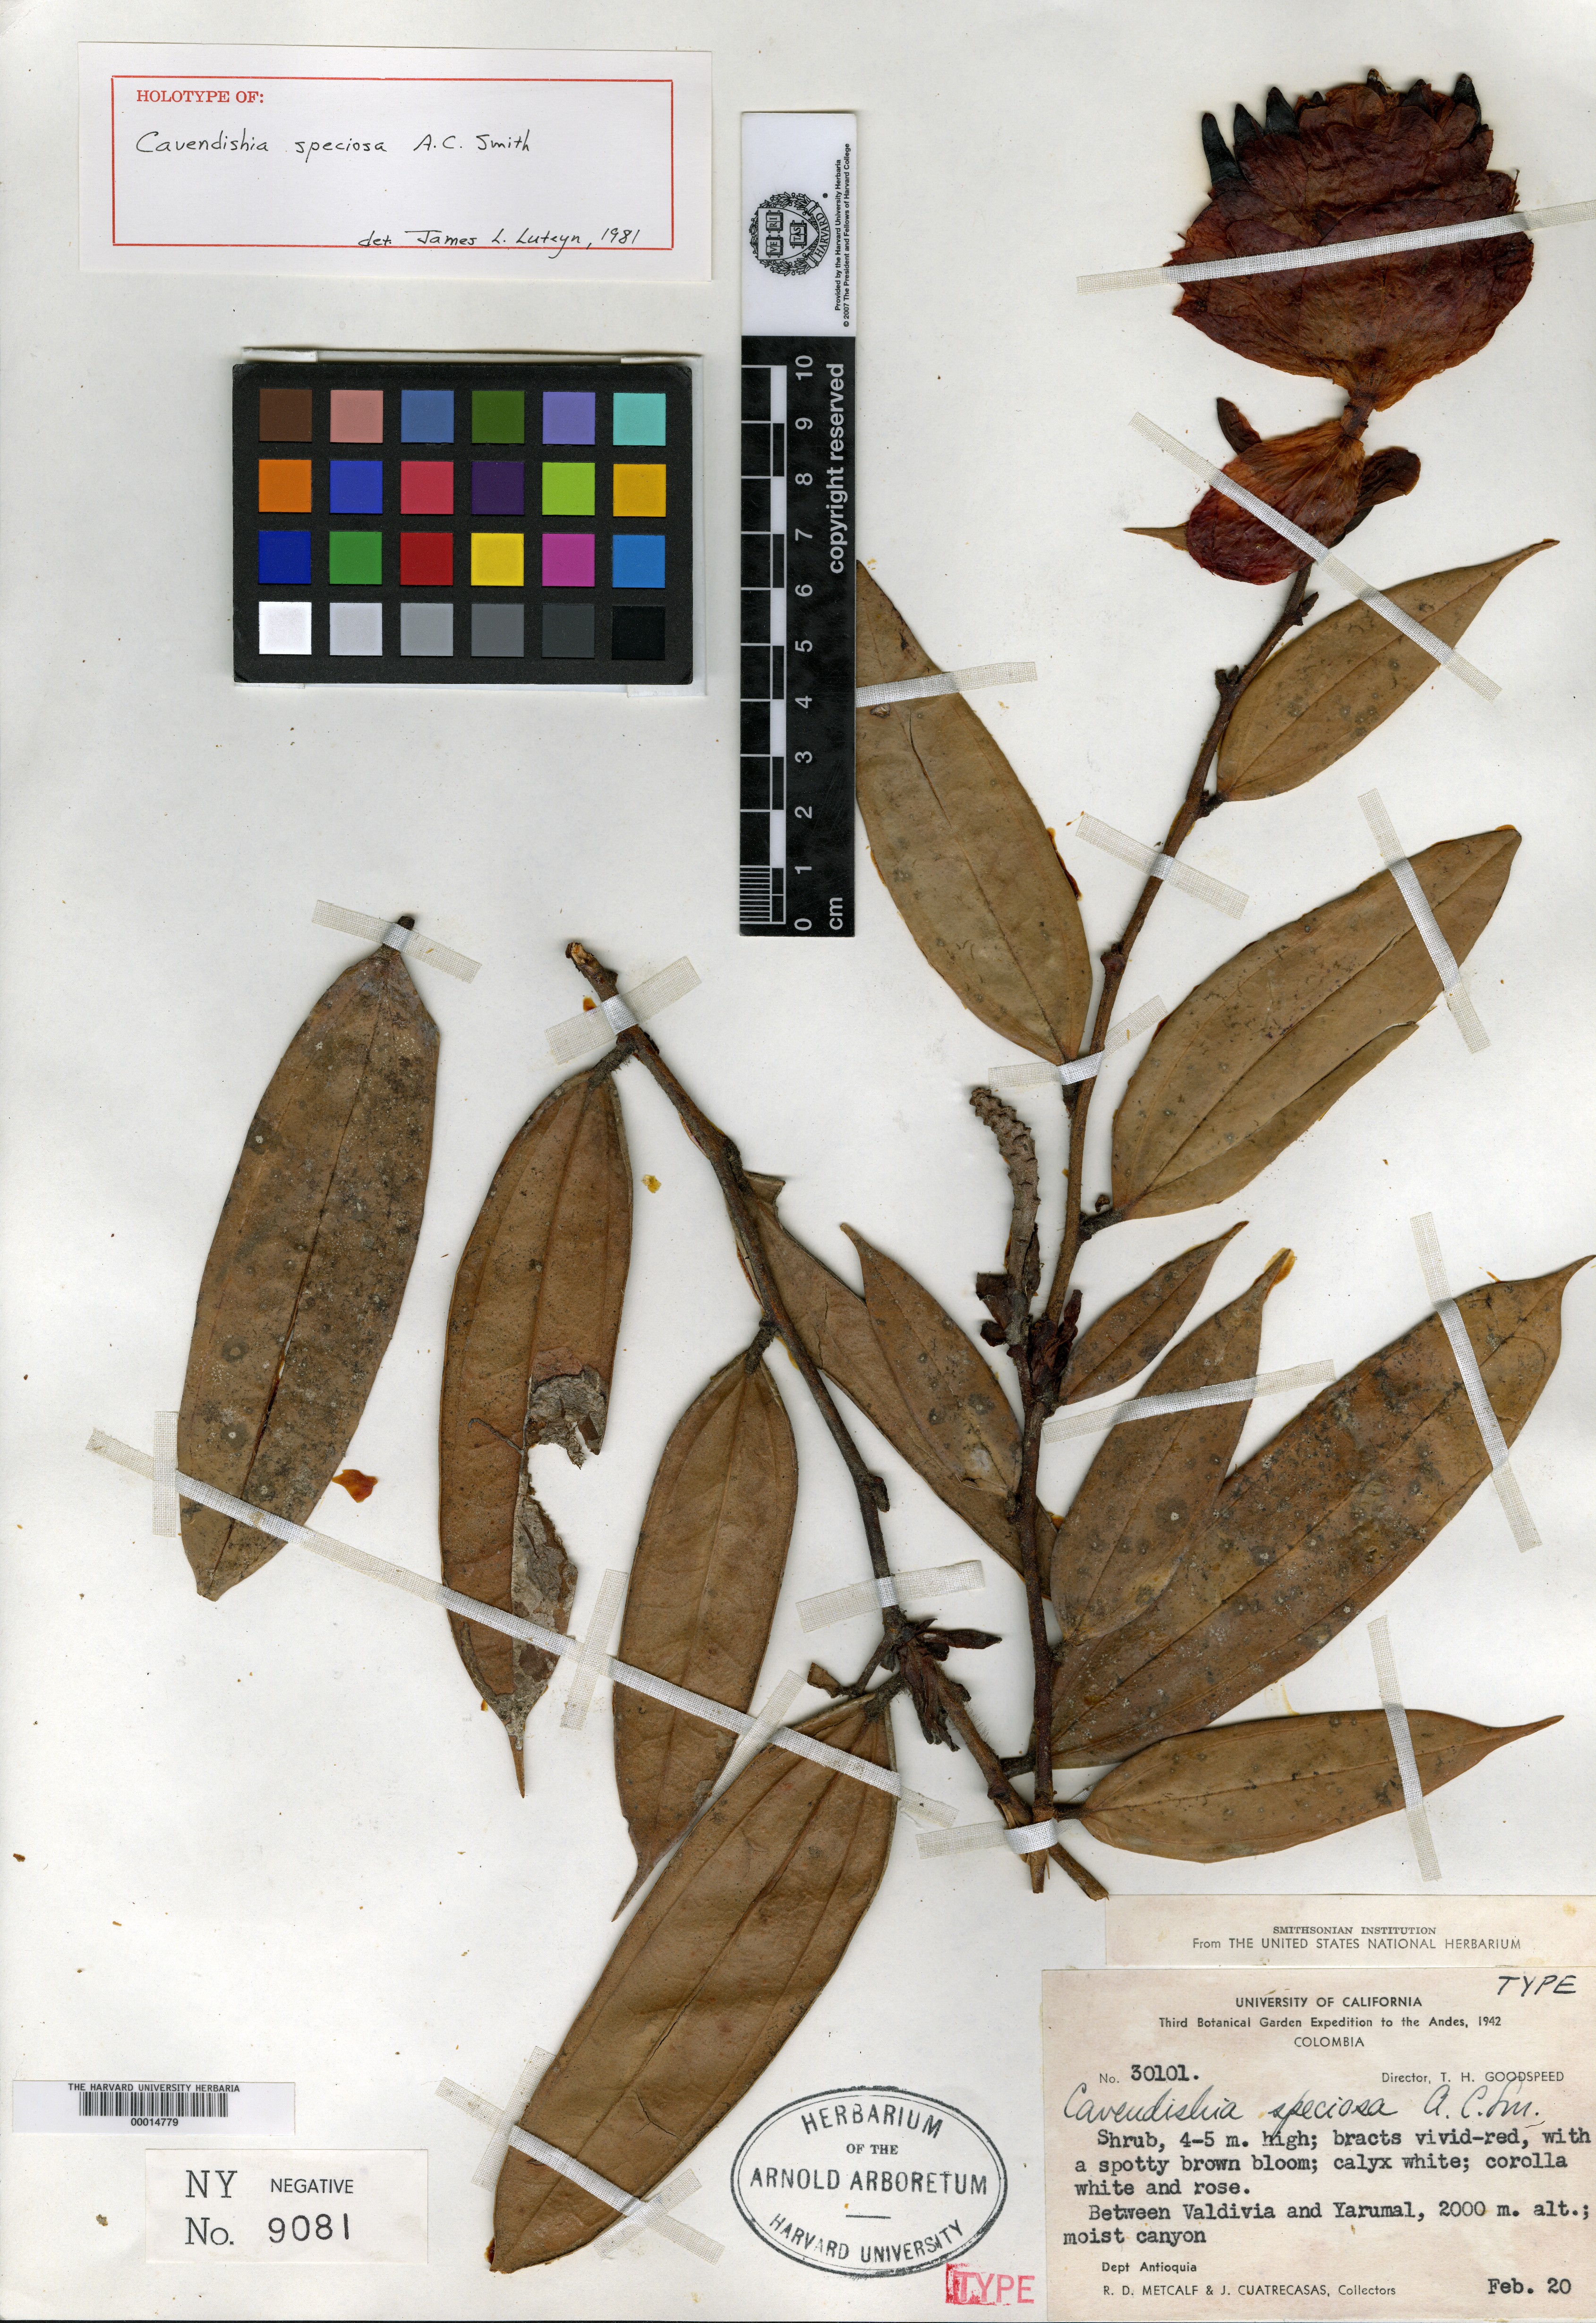 Agapetes angulata image